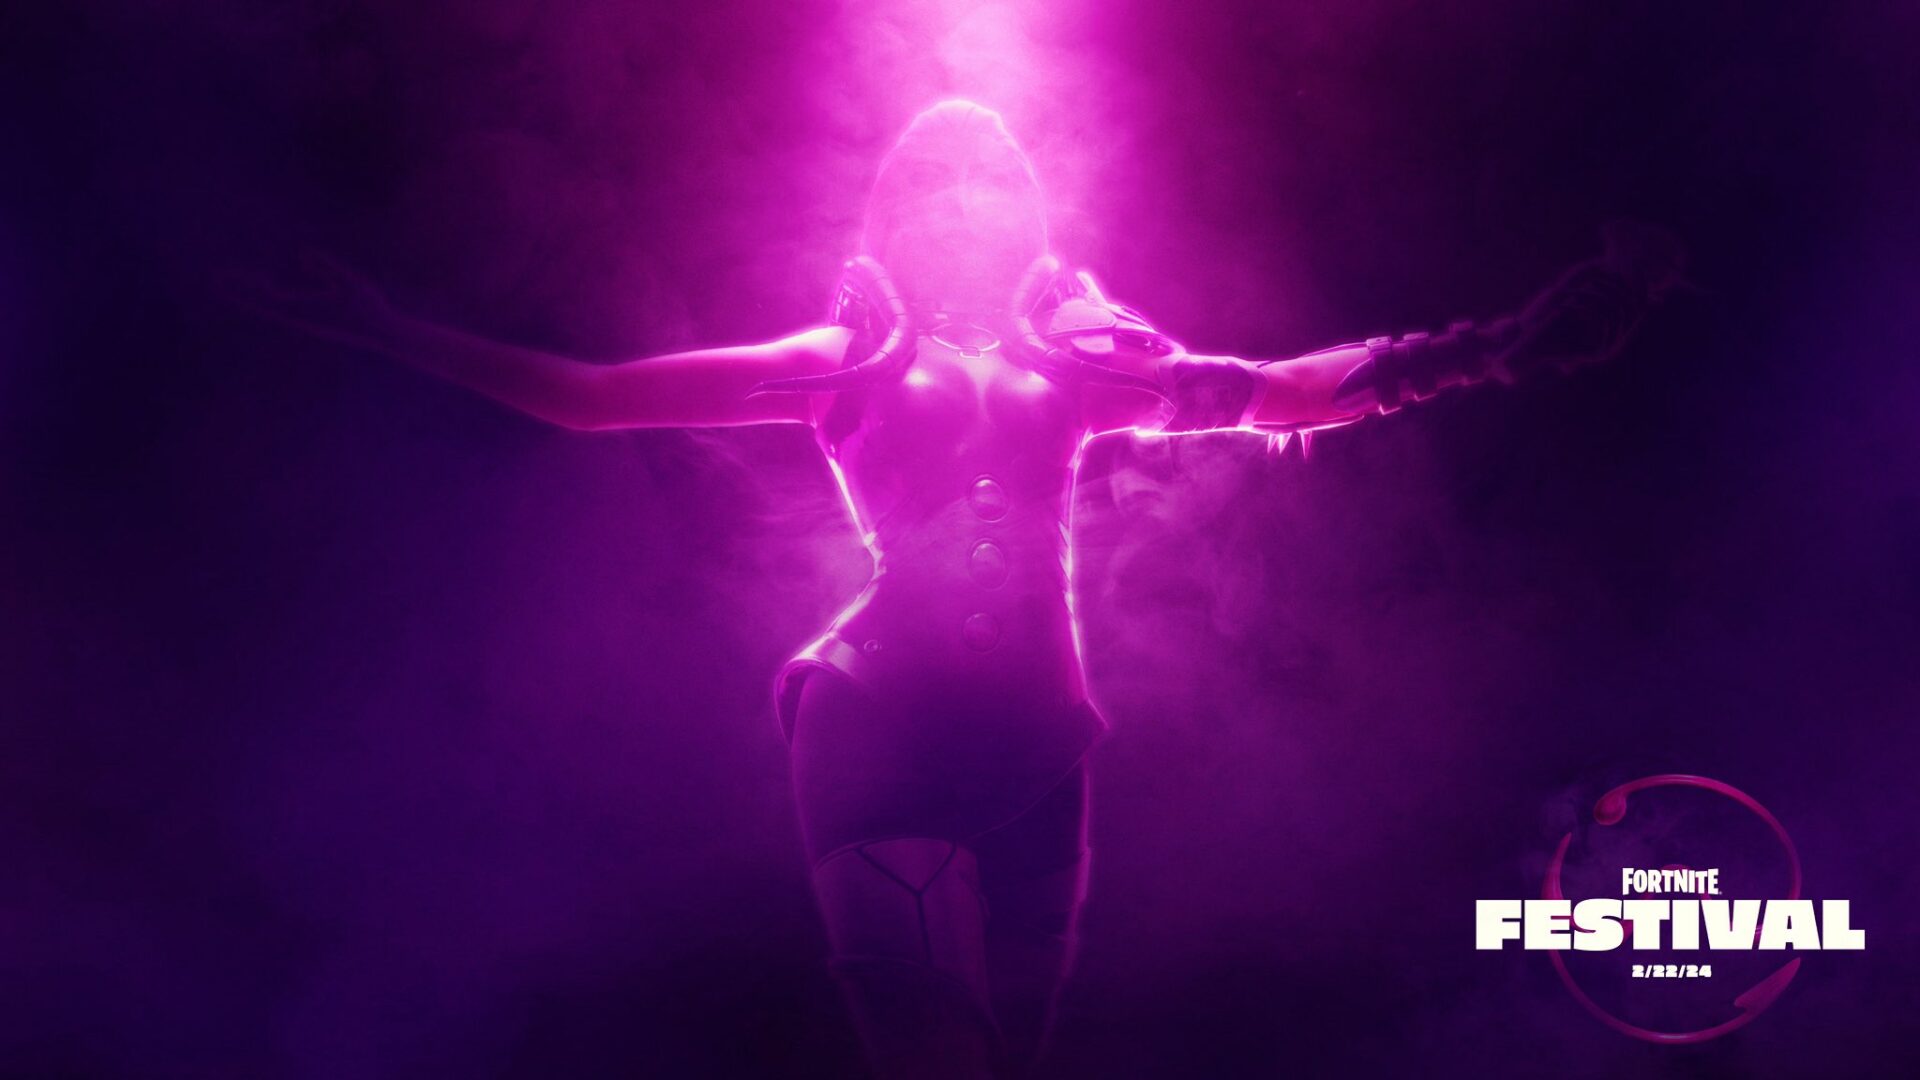 Lady Gaga Fortnite Festival Promo Image